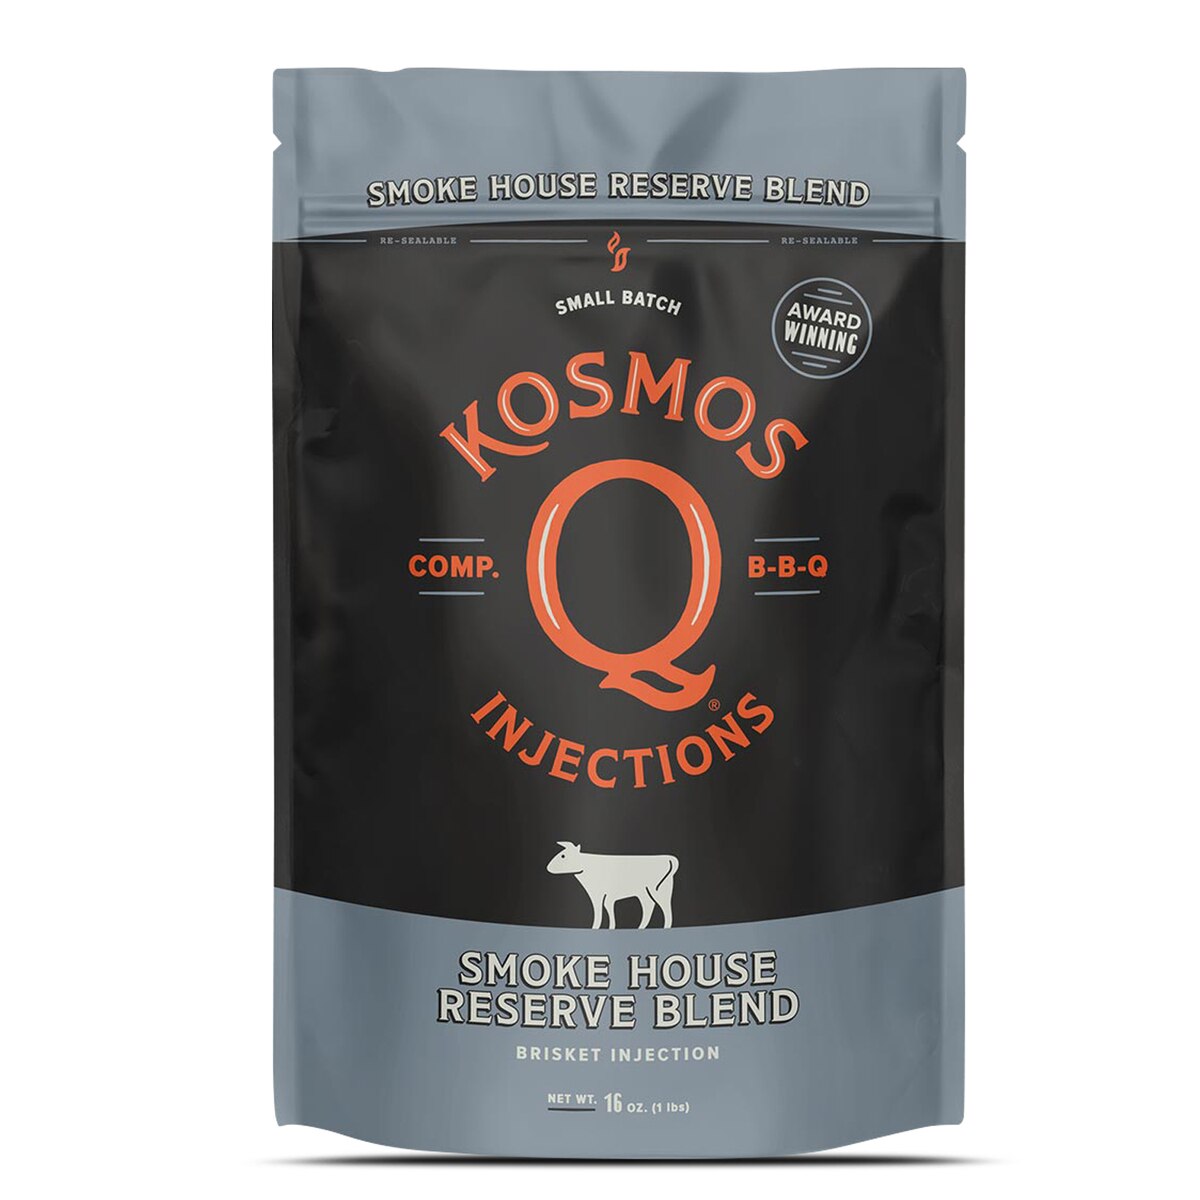 Kosmo's Q Smoke House Reserve Blend Brisket Injection